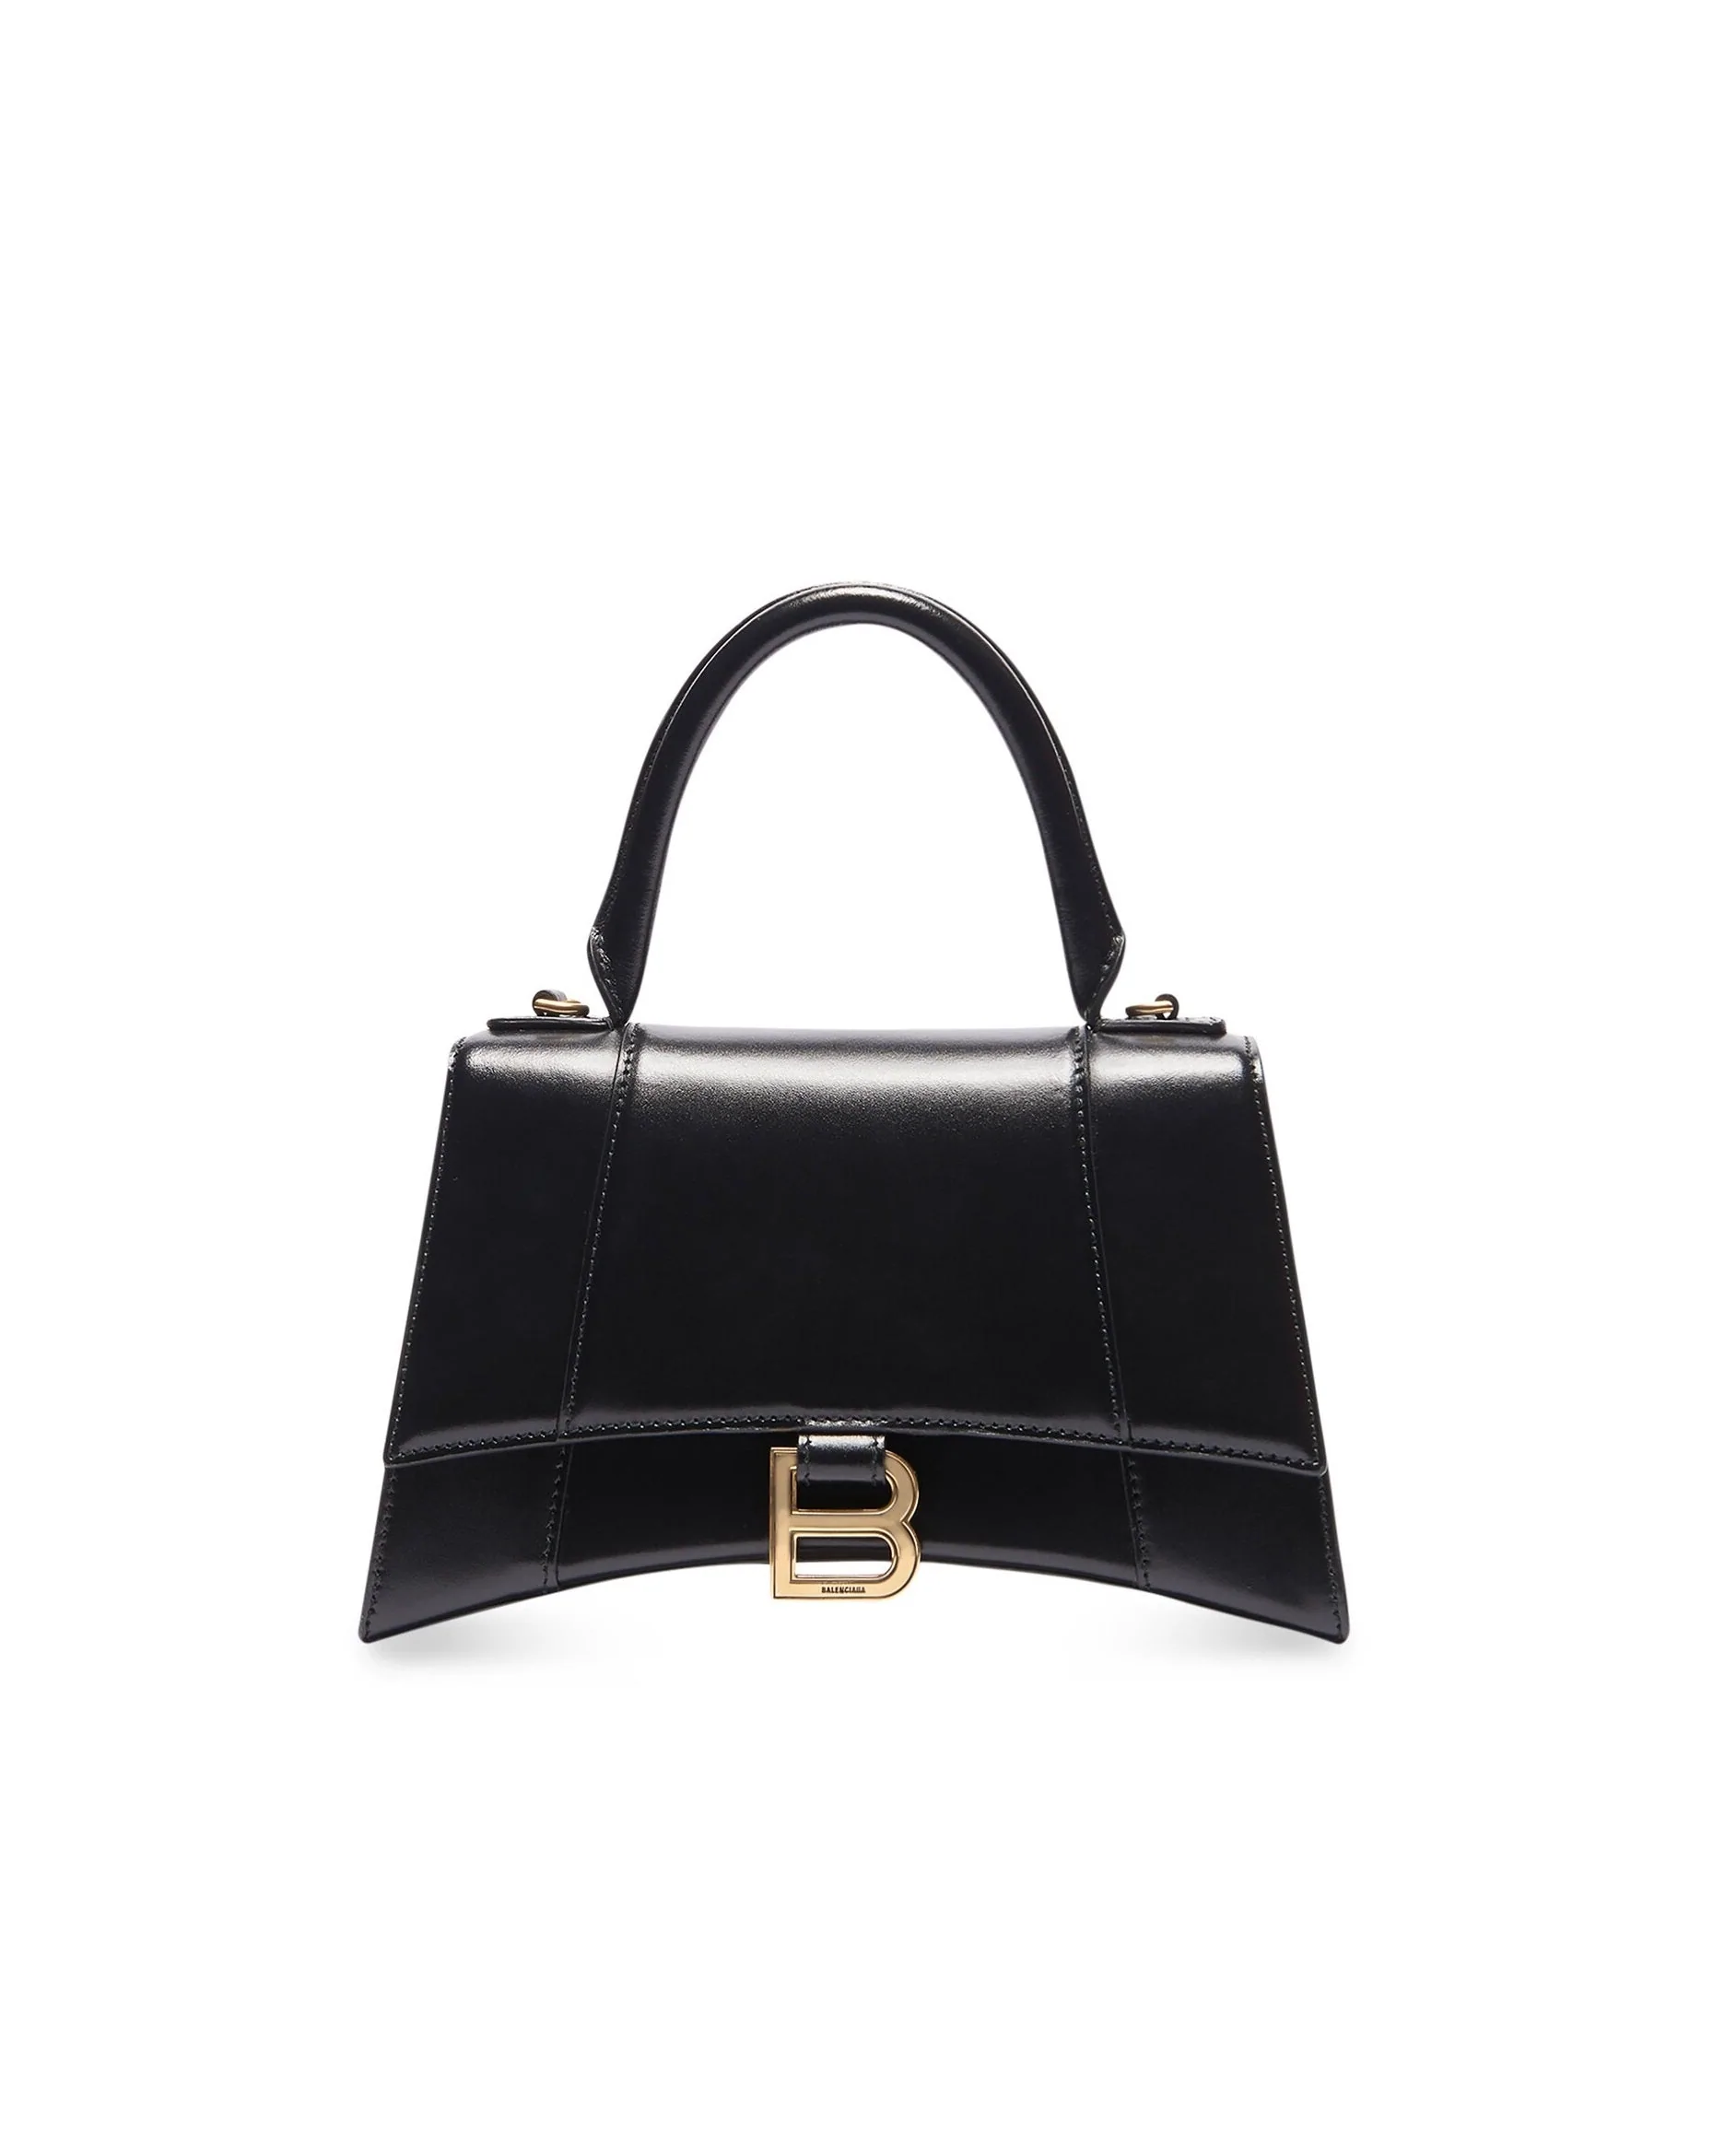 Balenciaga Hourglass Small Handbag in black